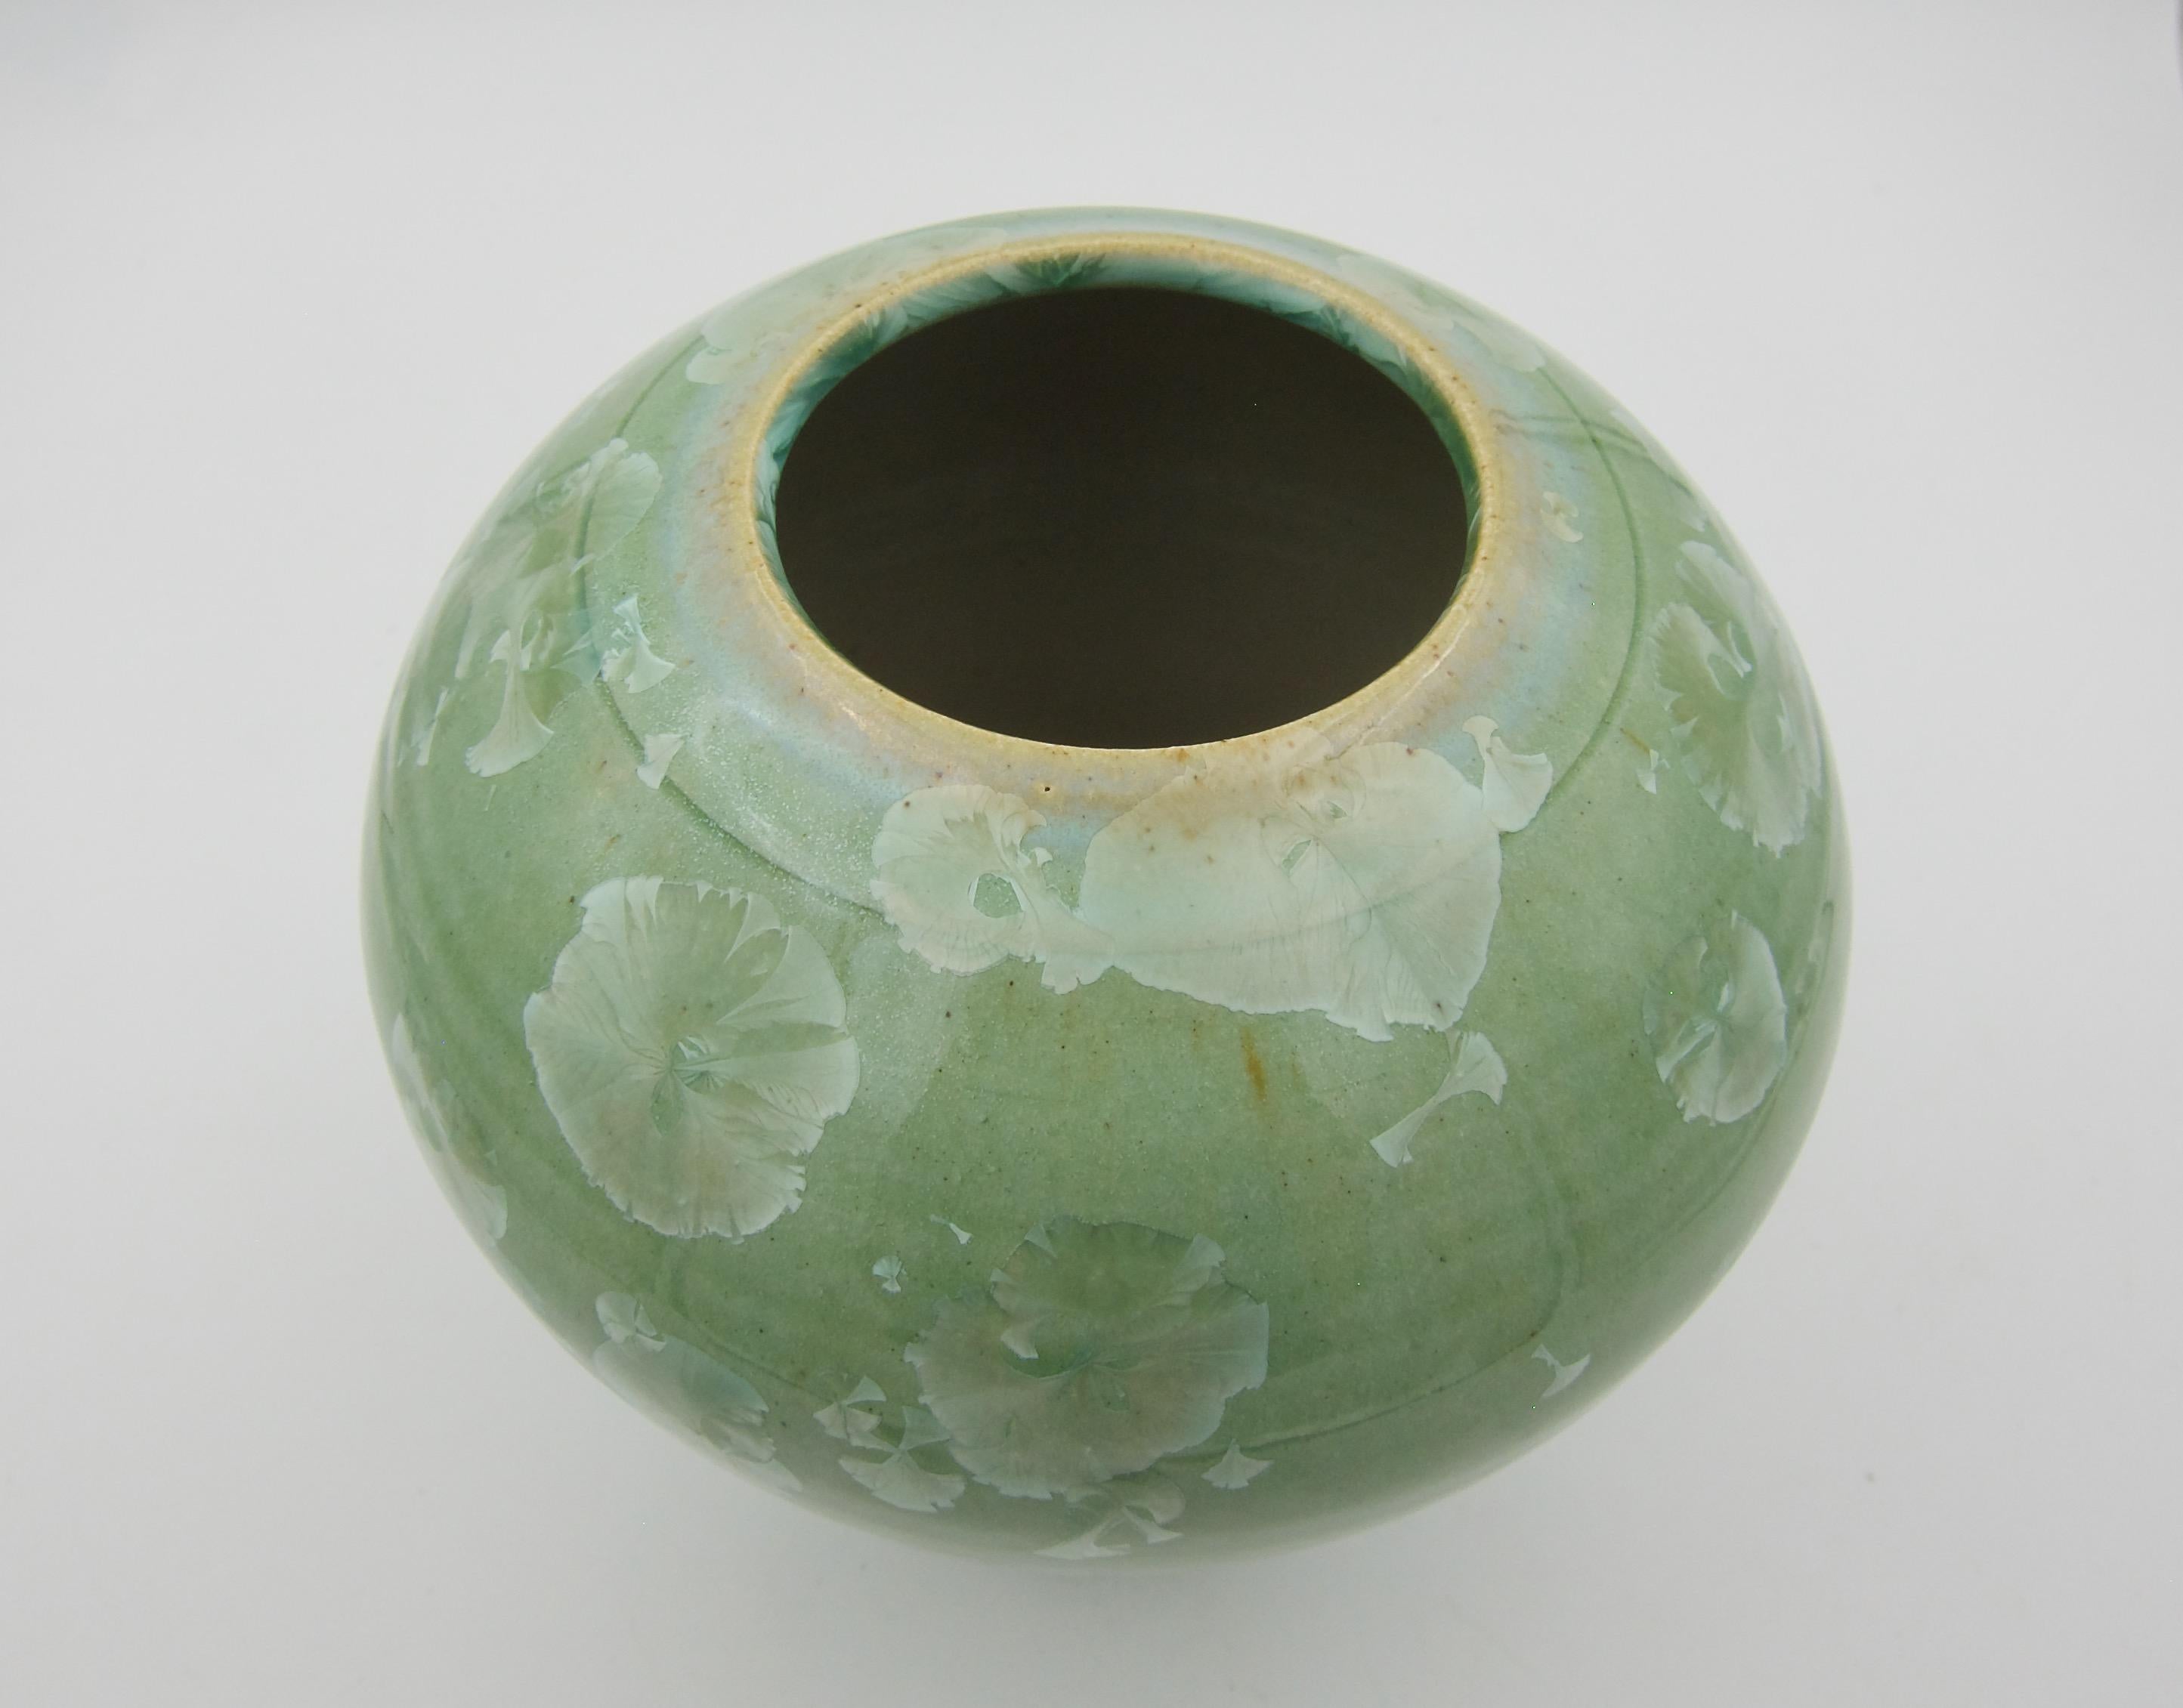 American Vintage Signed Buckingham Green Crystalline Art Pottery Vase 1987